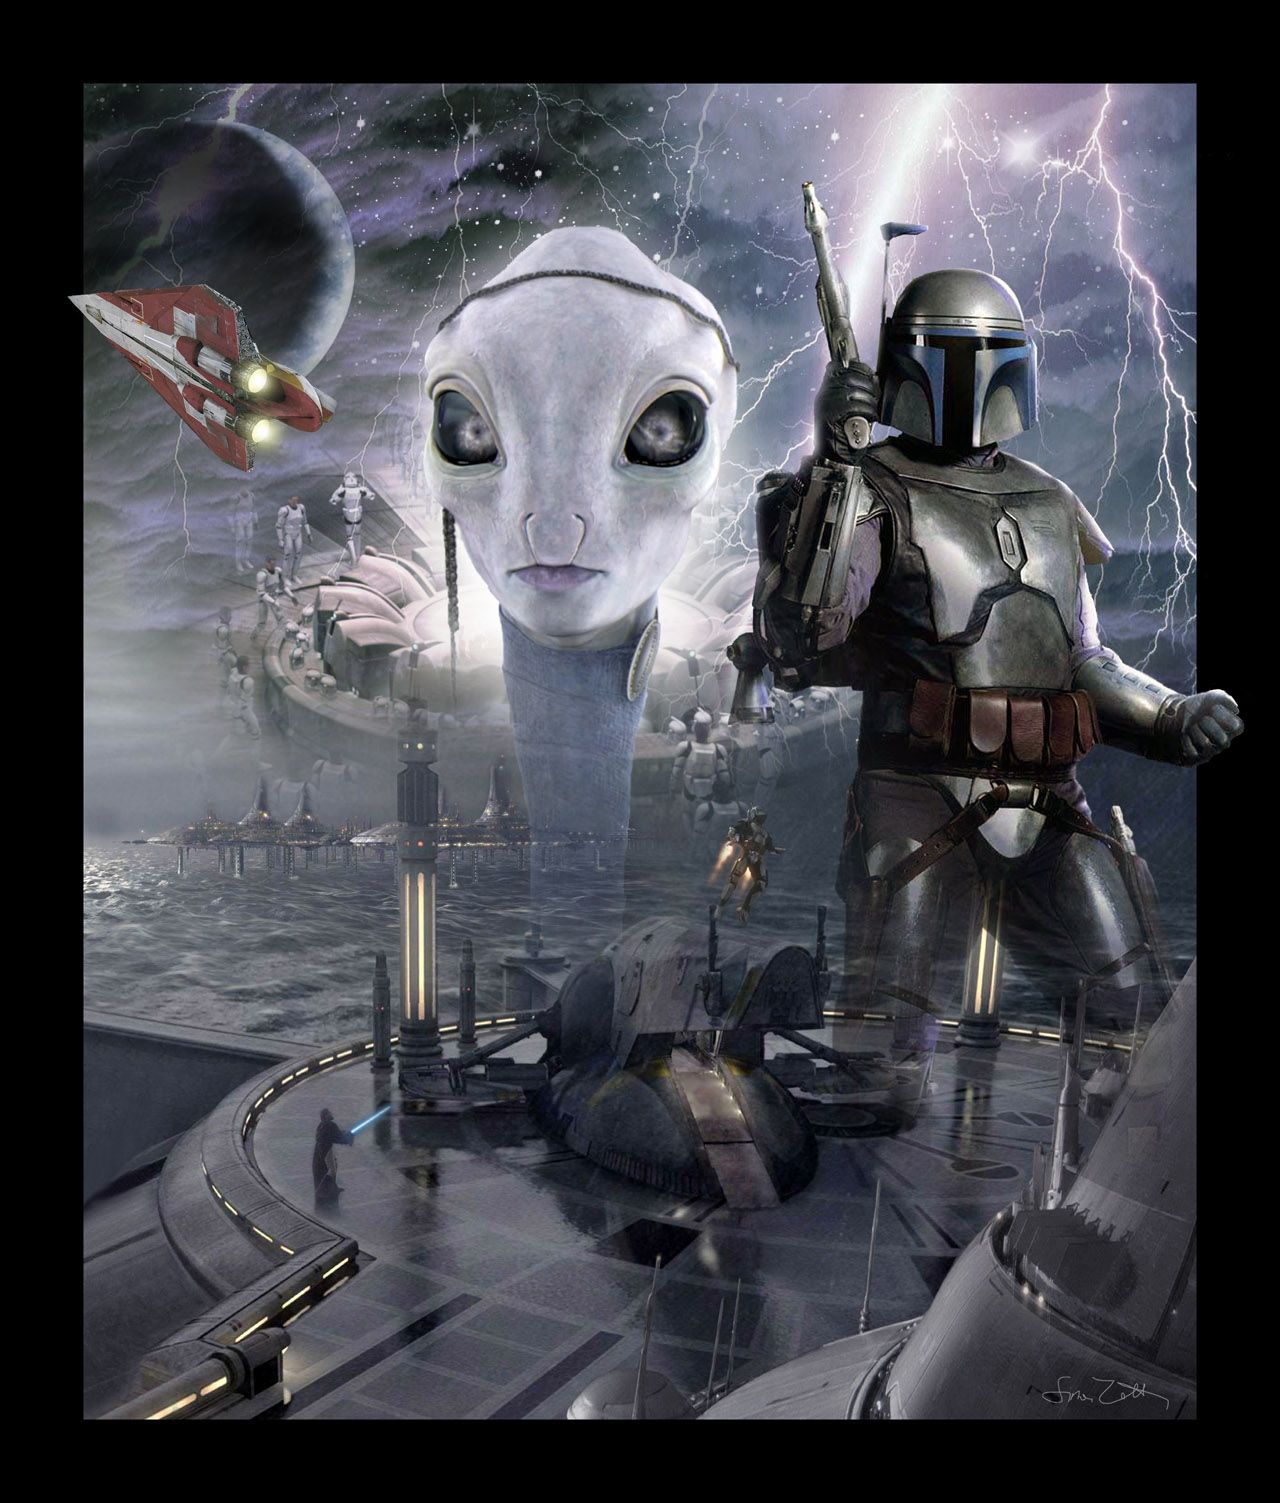 Kamino. Star wars image, Star wars wallpaper, Star wars episode ii